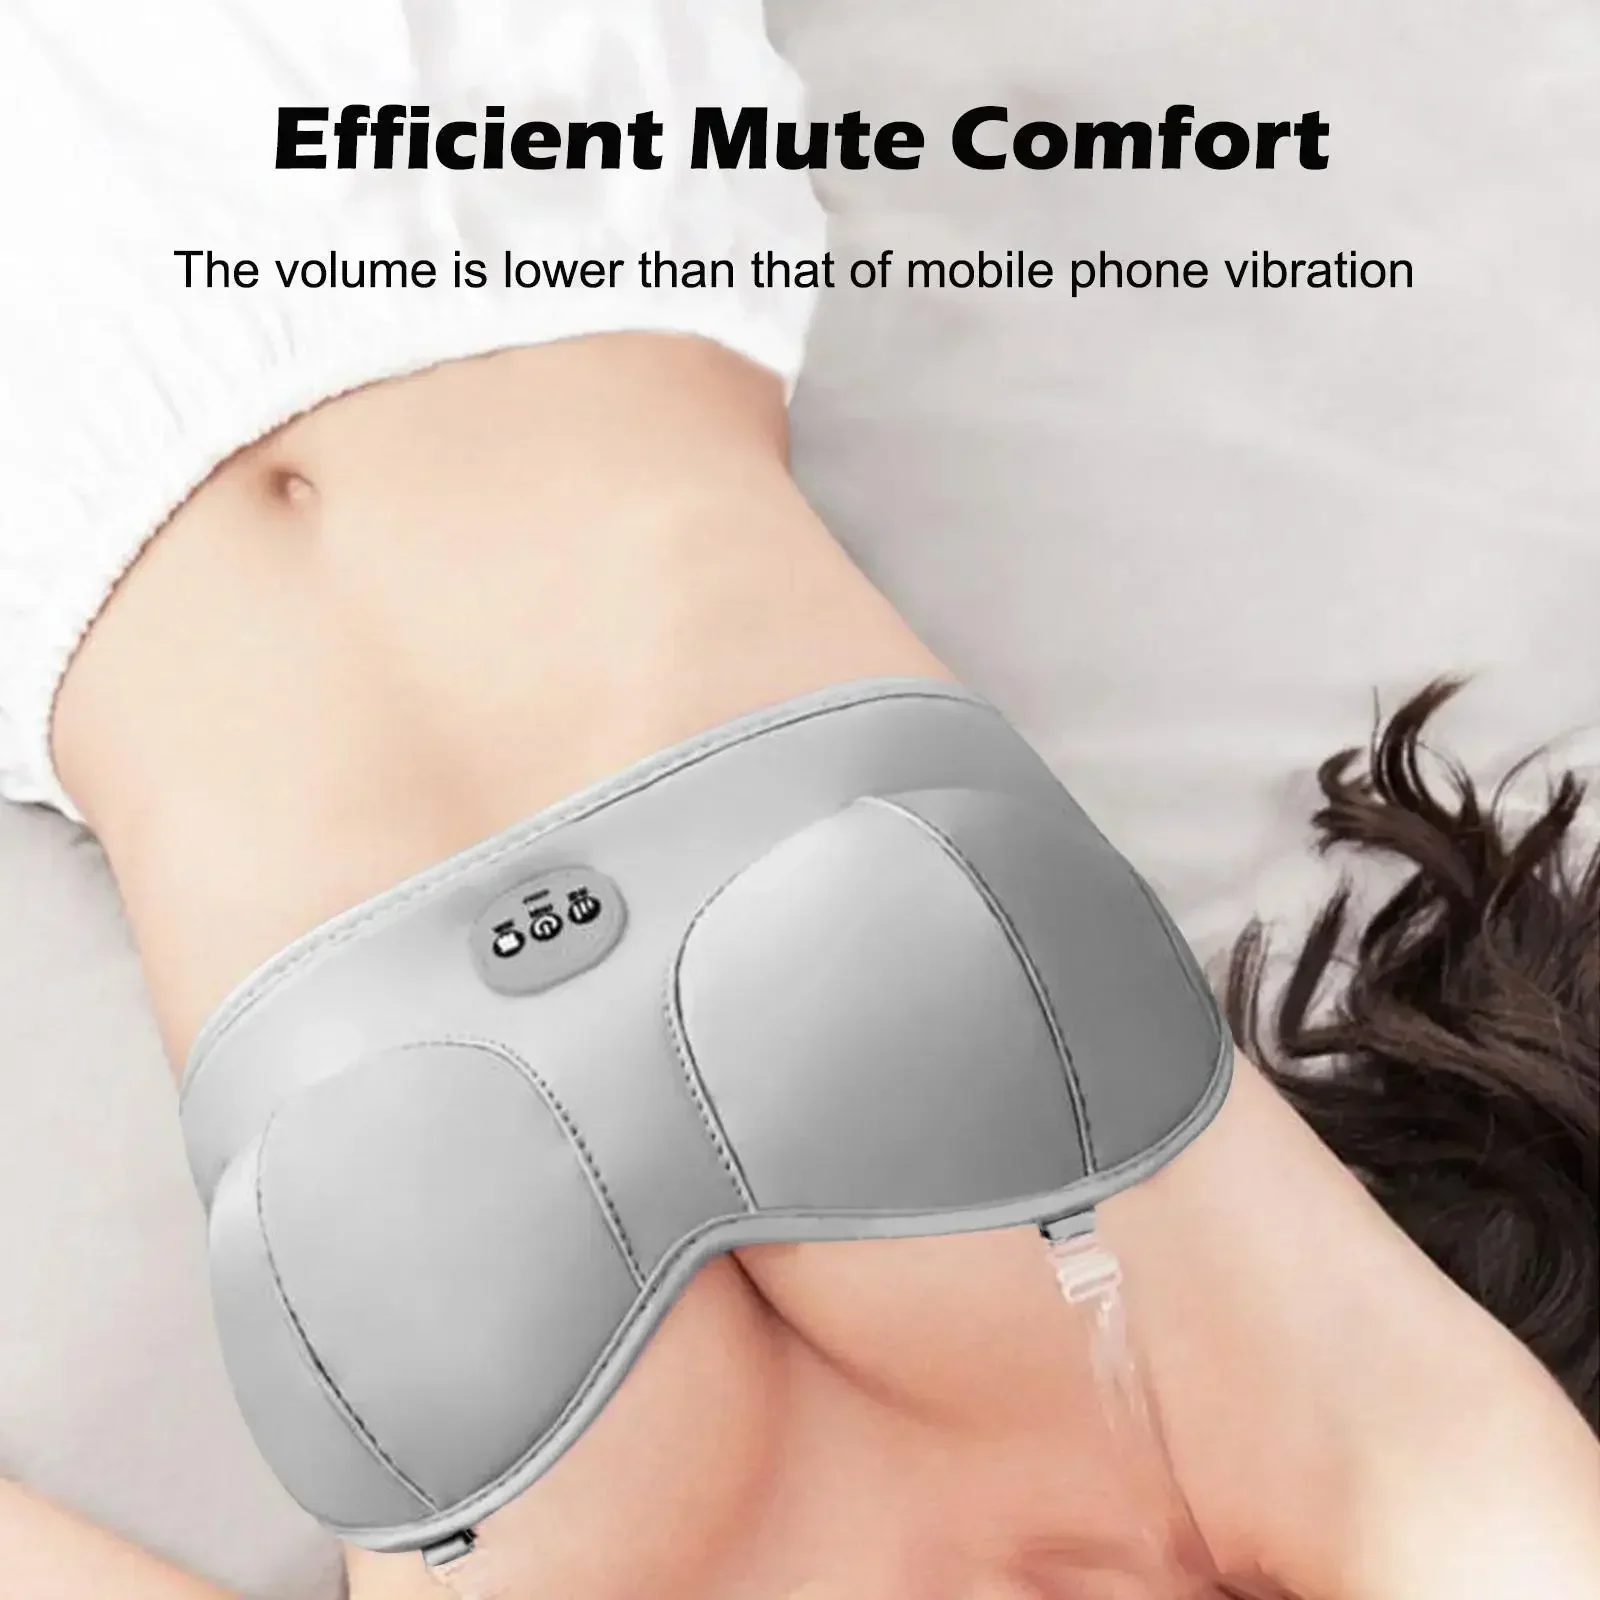 S25c045758cc24fd8bd1e51d7437bd519s Electric Breast Massage Bra Electronic Vibration Chest Massager Breast Enhancement Instrument Breast Heating Stimulator Machine